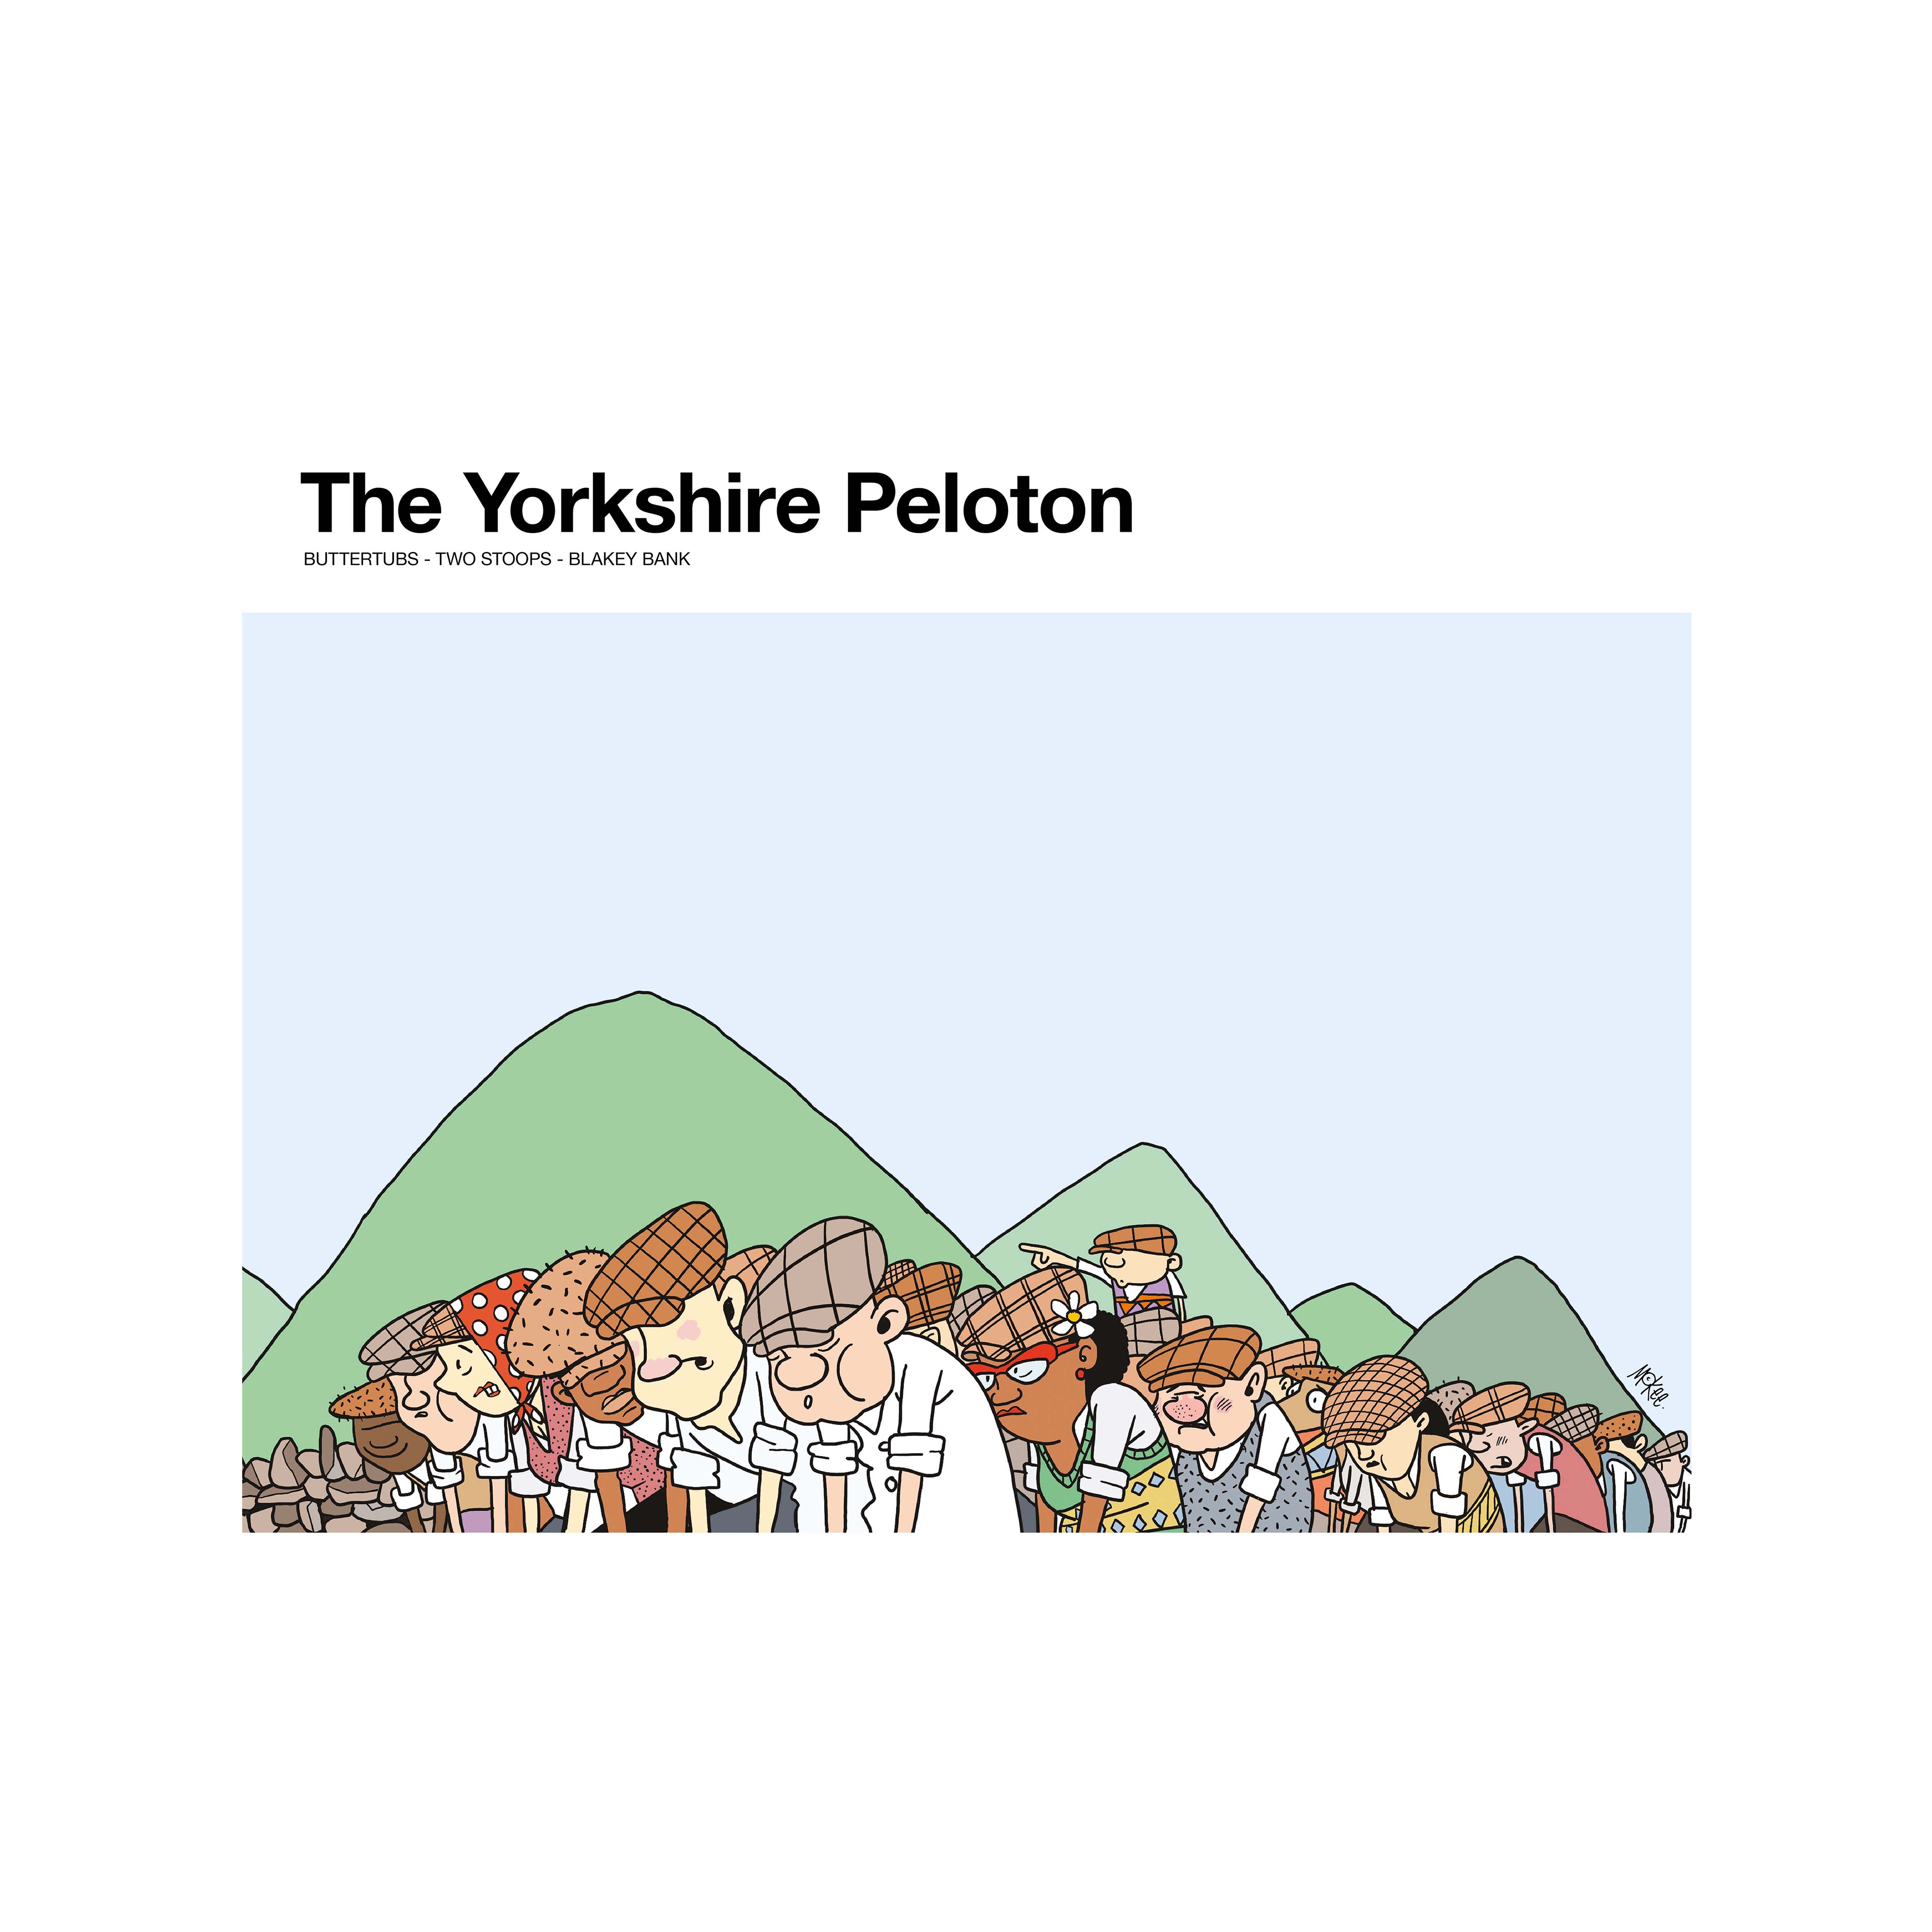 The Yorkshire Peloton